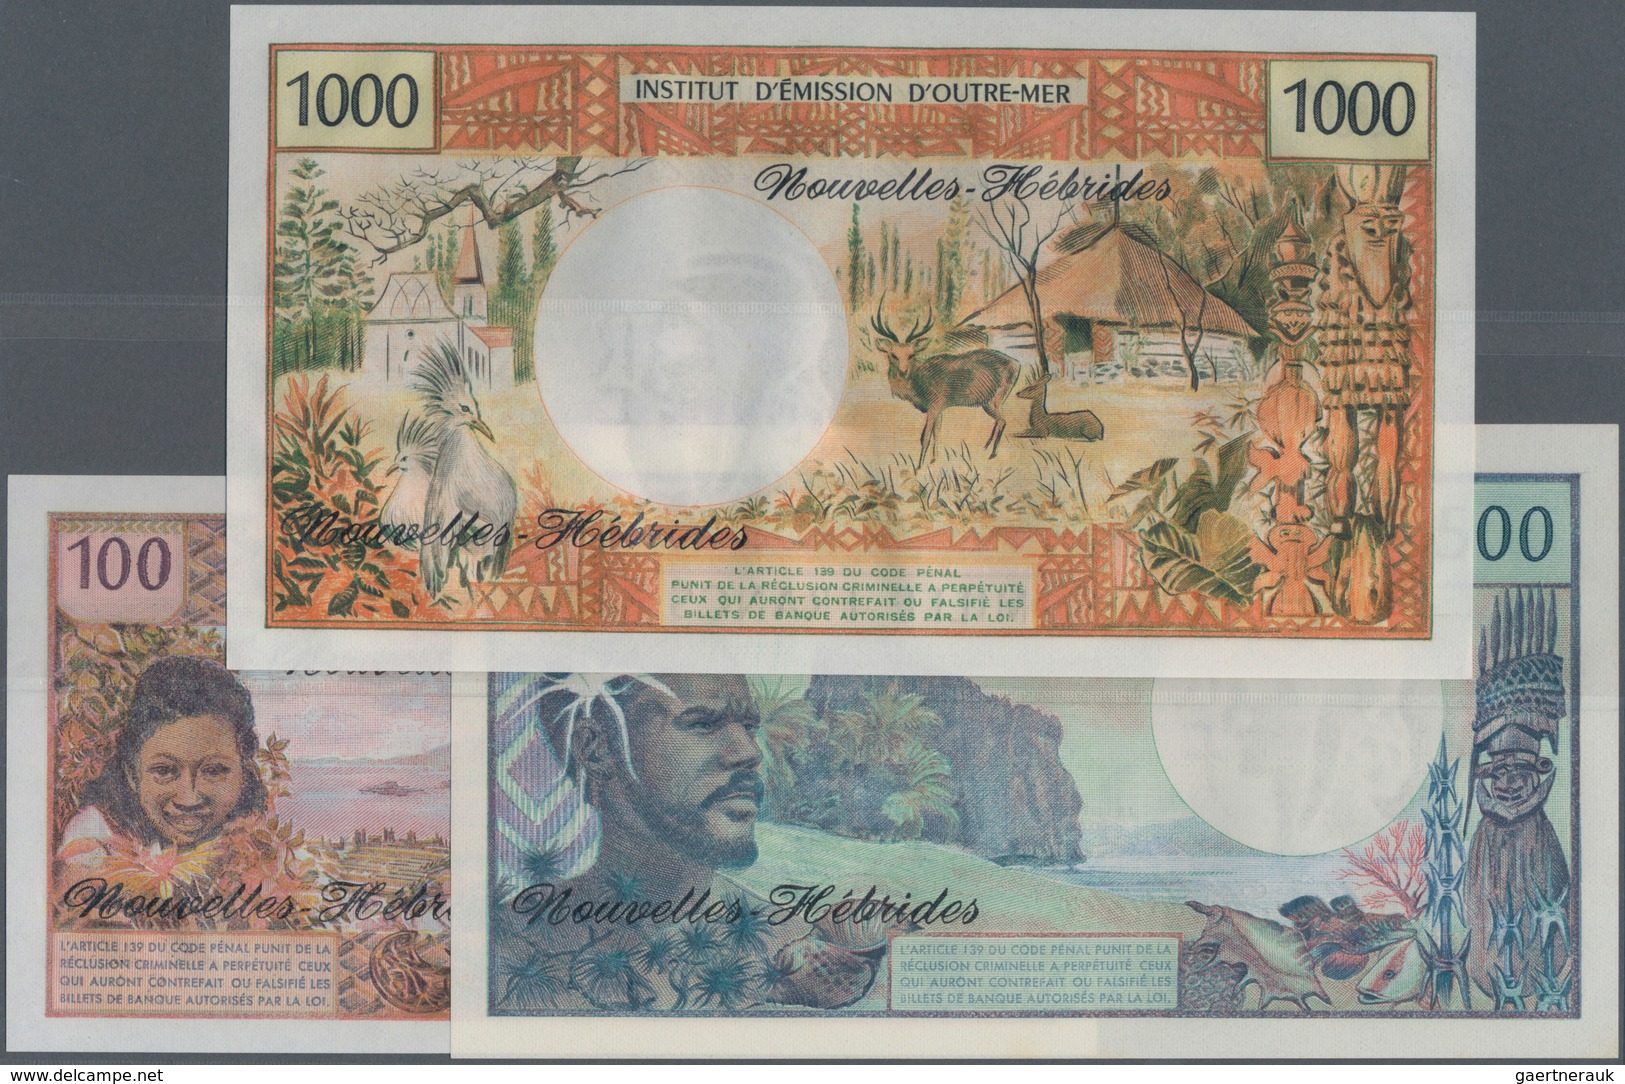 New Hebrides / Neue Hebriden: Set Of 3 Notes Containing 100, 500 & 1000 Francs ND P. 18d, 19a, 20c, - Neue Hebriden